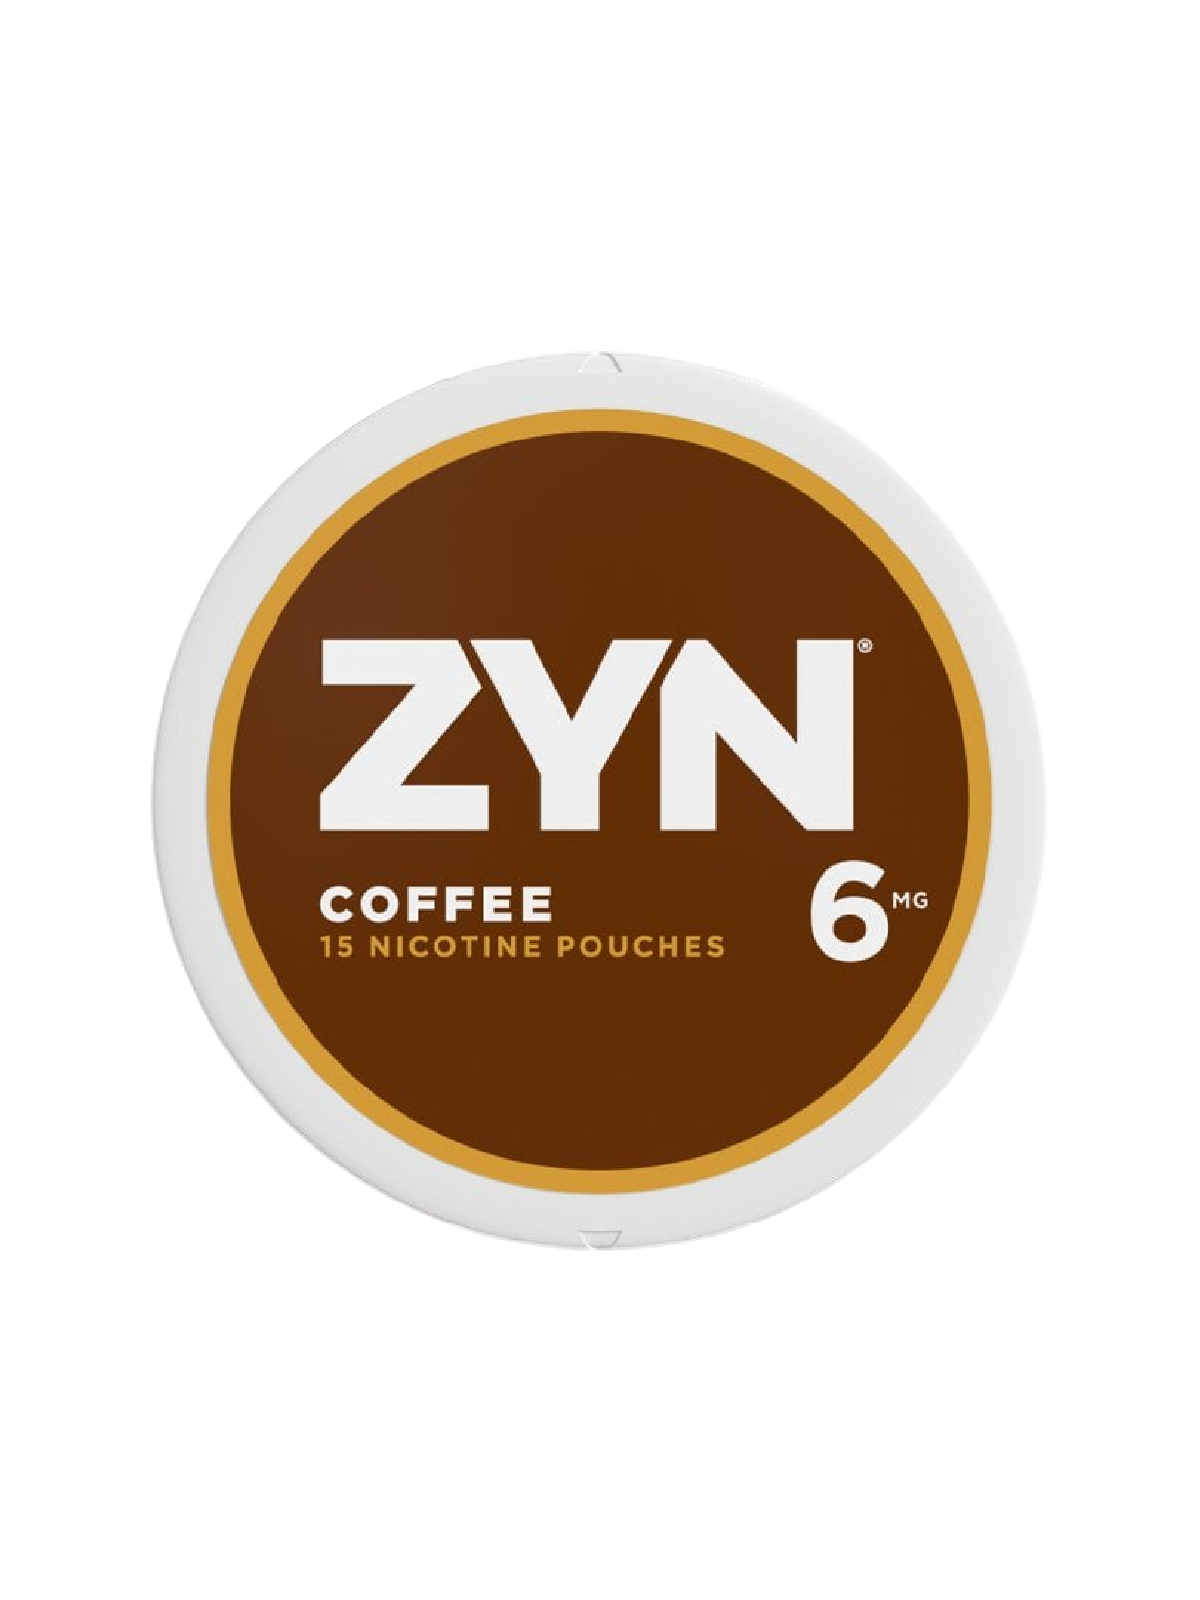 ZYN COFFEE 6 MG